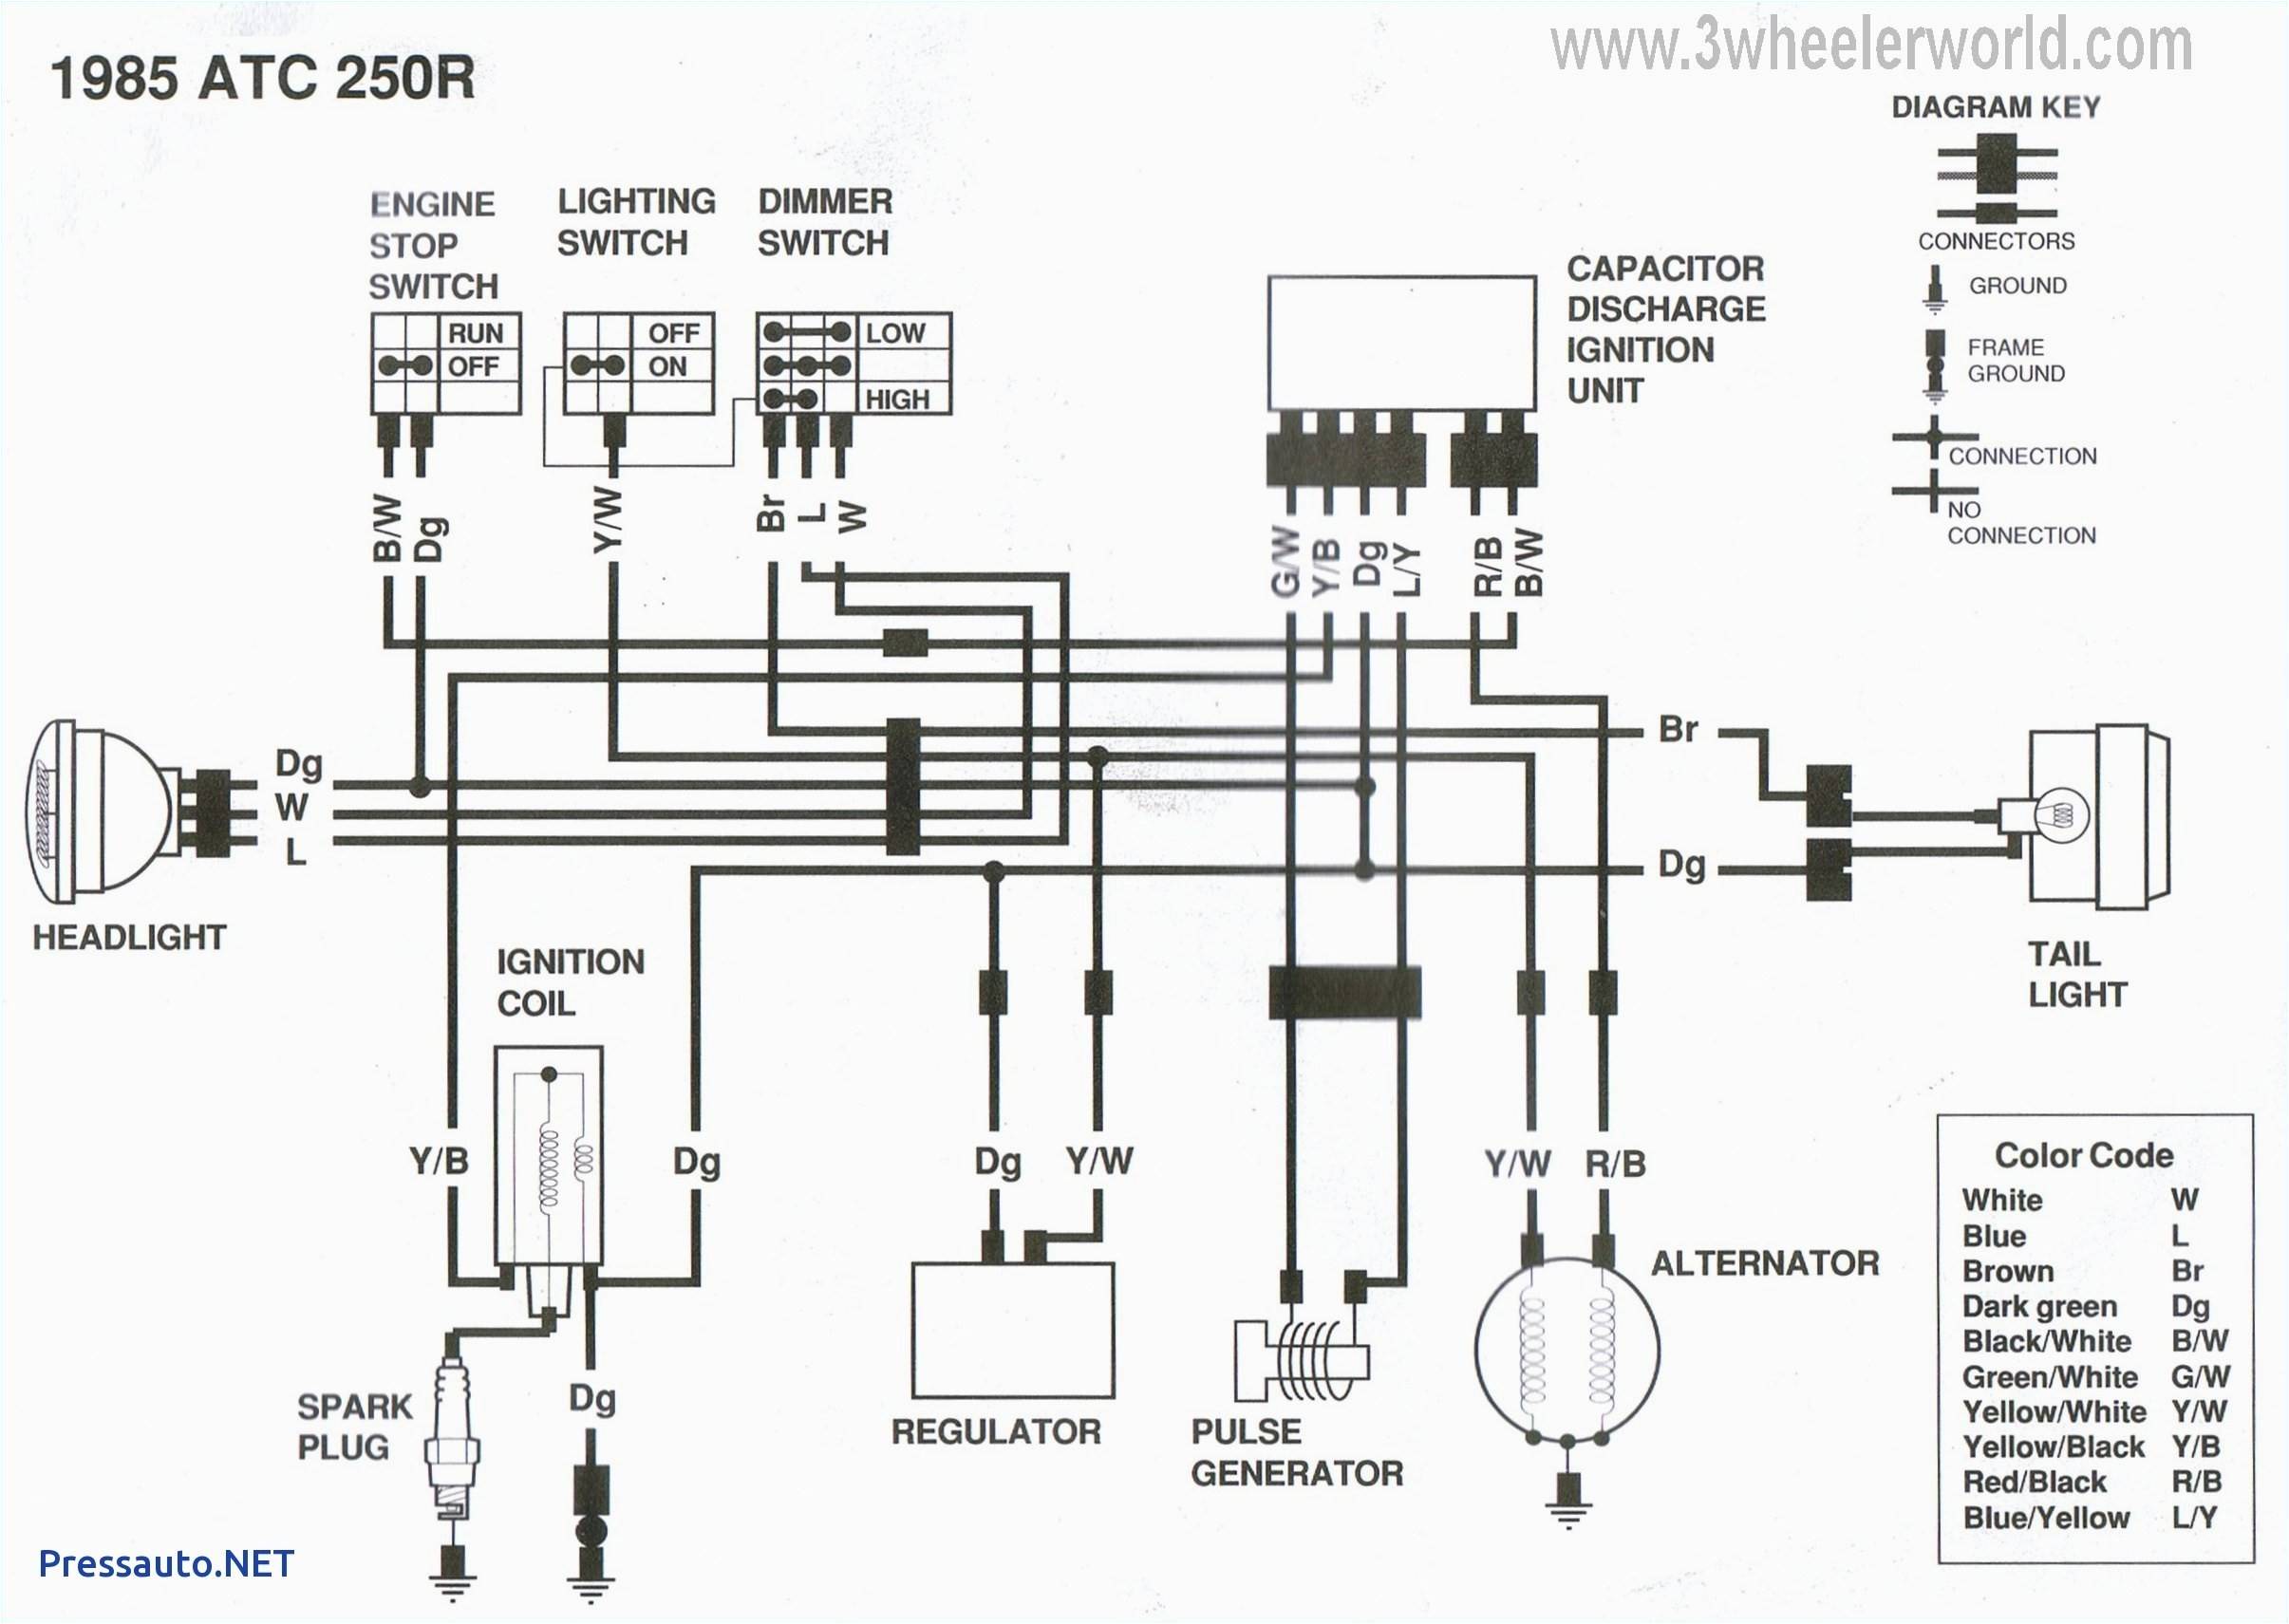 wiring schematics page 3 wiring diagram blog wiring diagrams page 4